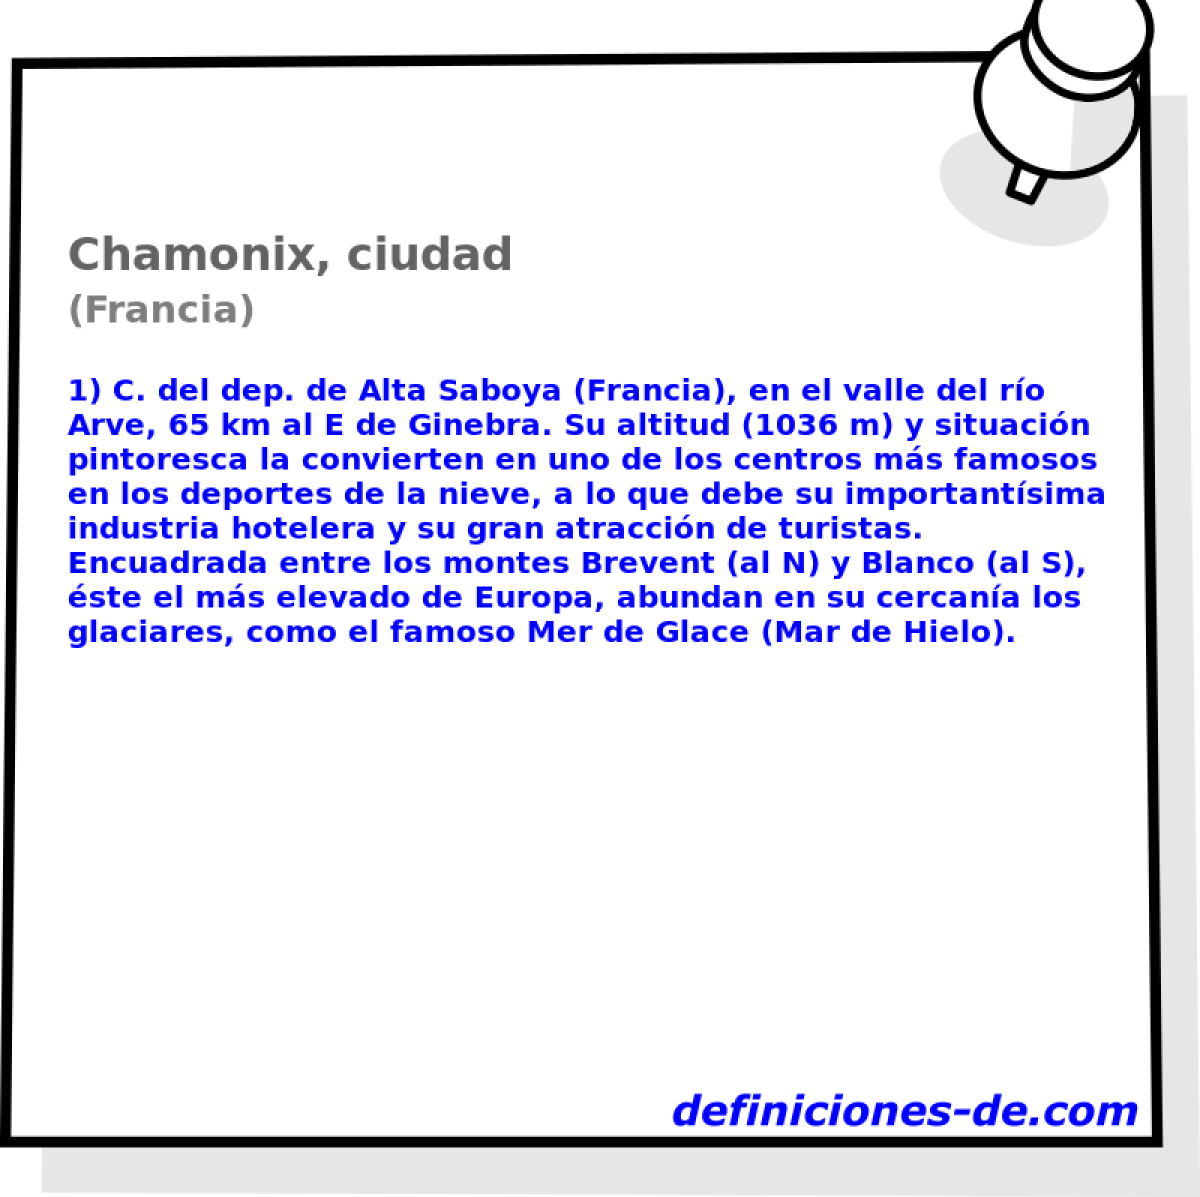 Chamonix, ciudad (Francia)